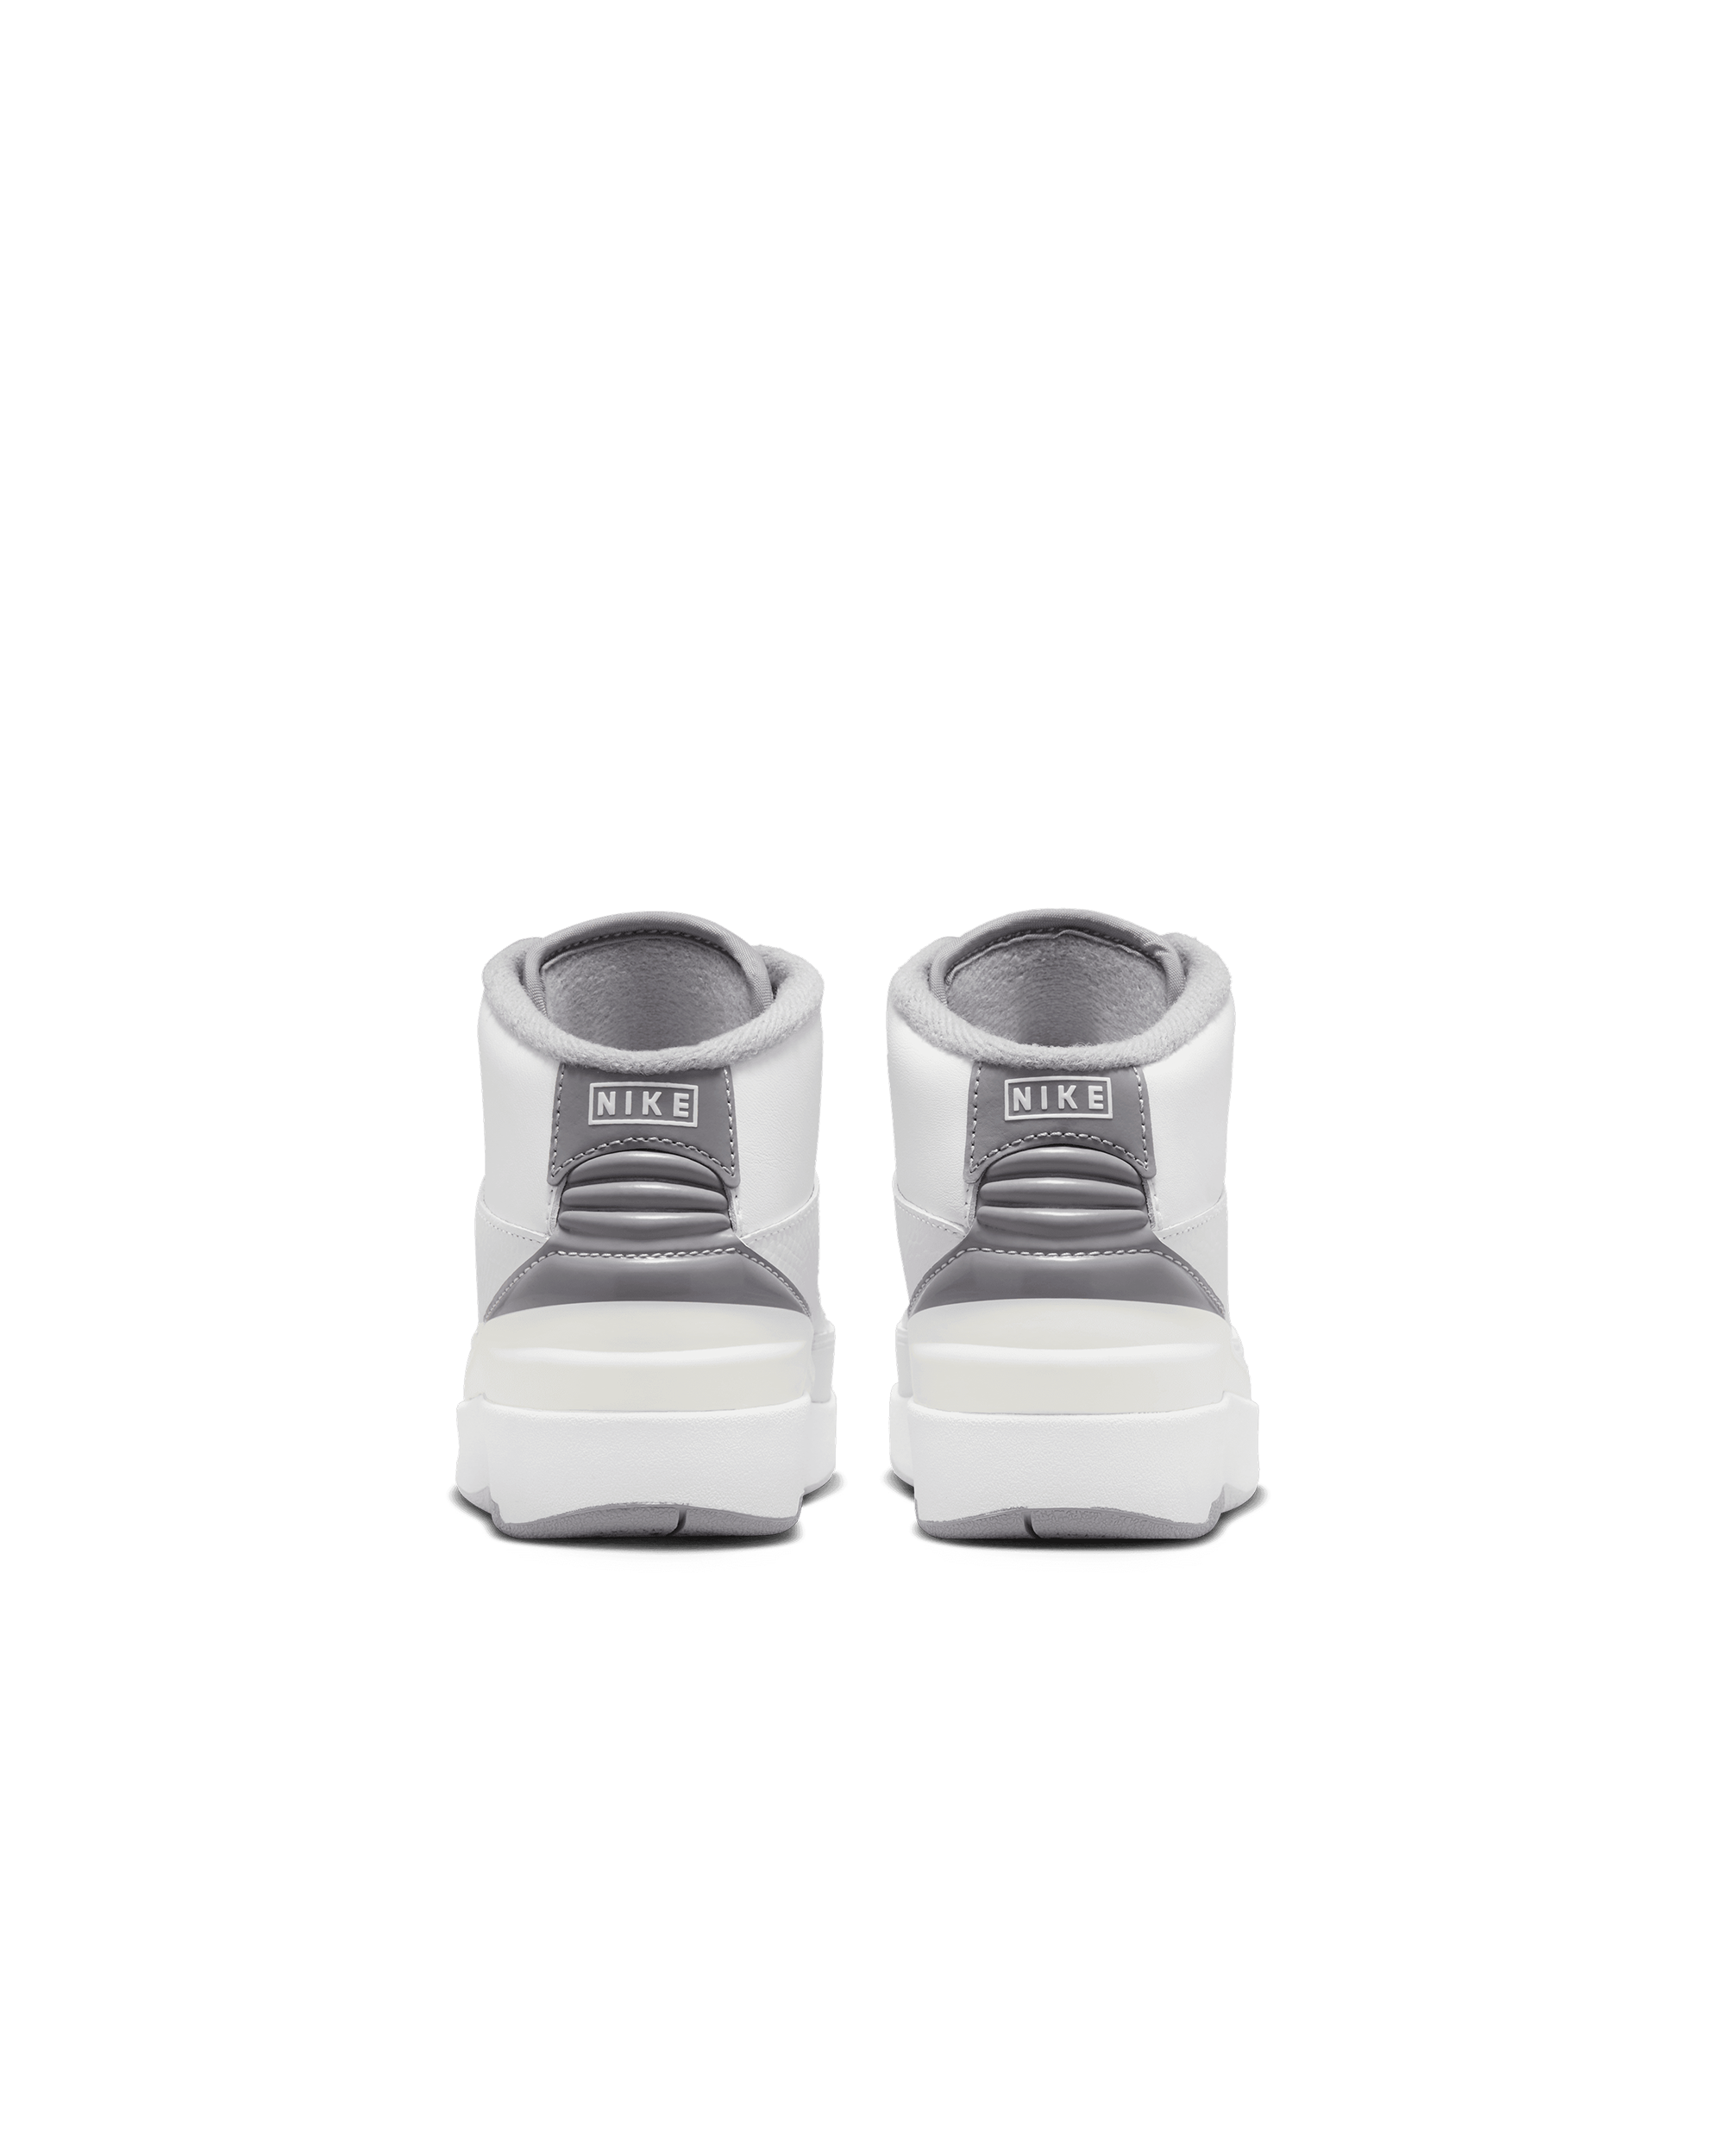 Jordan 2 Retro (PS) - White / Cement Grey / Sail